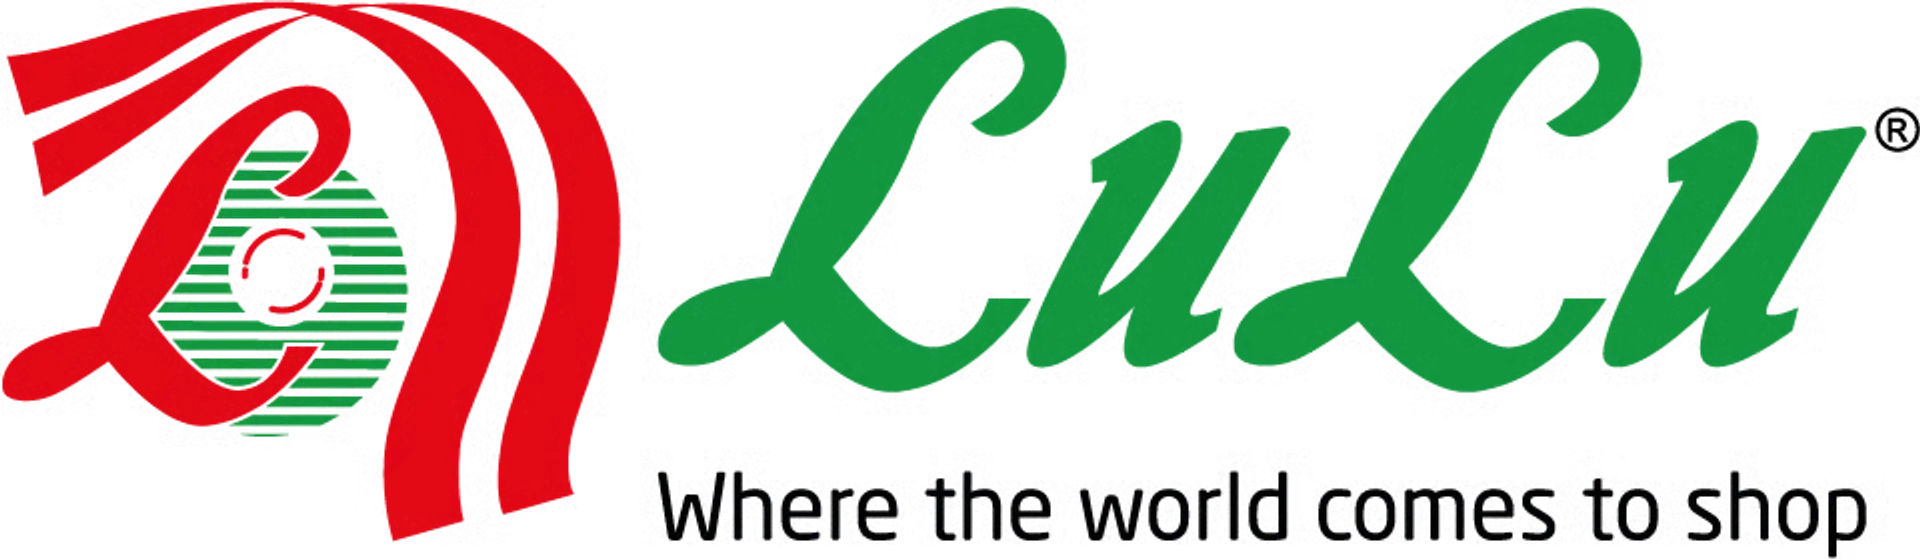 LULU HYPERMARKET logo. Current catalogue